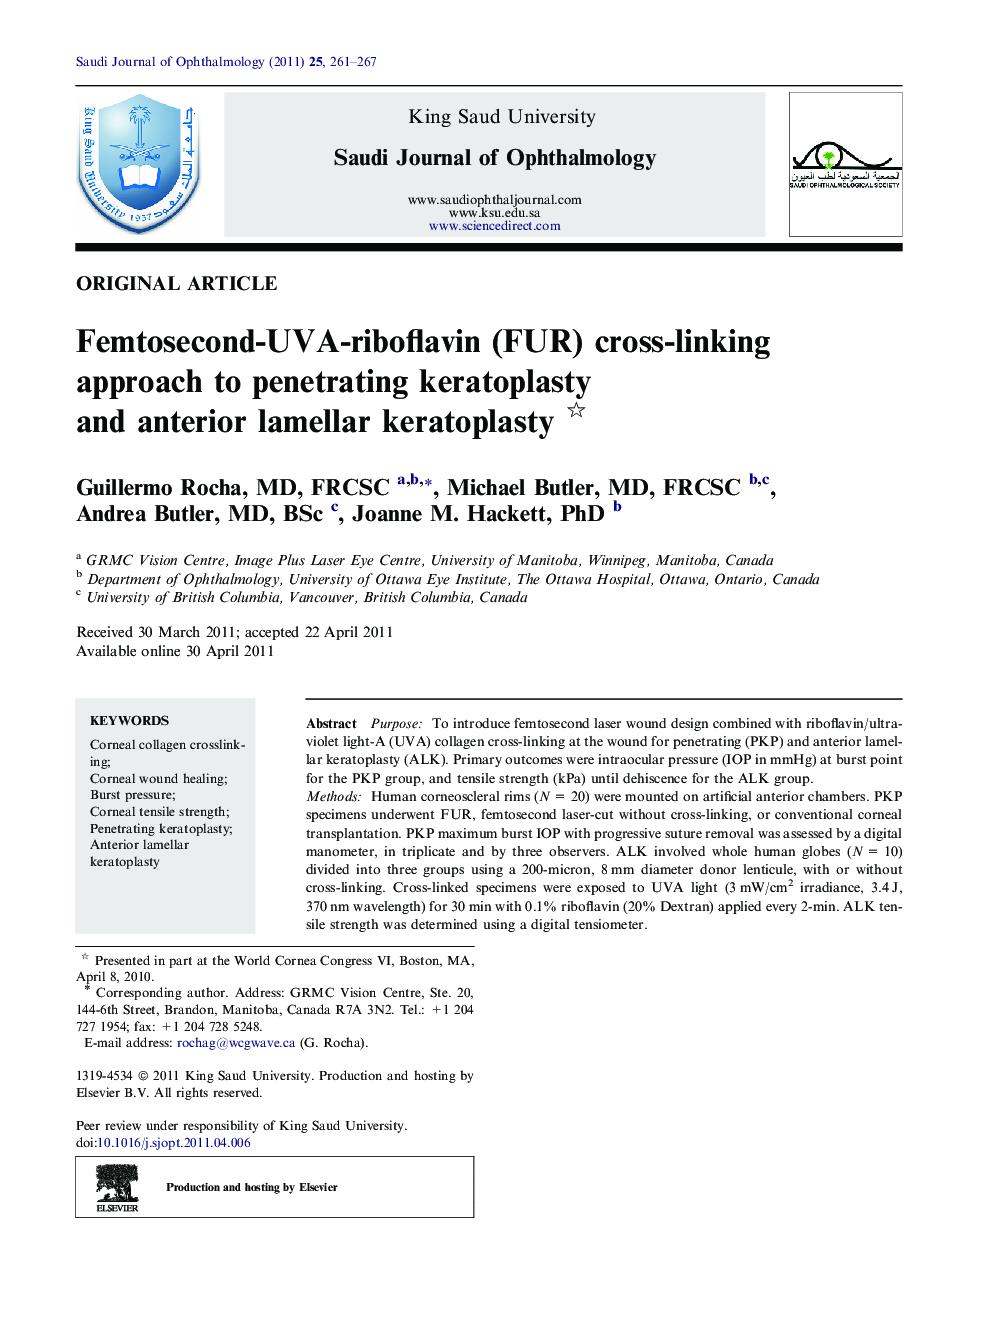 Femtosecond-UVA-riboflavin (FUR) cross-linking approach to penetrating keratoplasty and anterior lamellar keratoplasty 